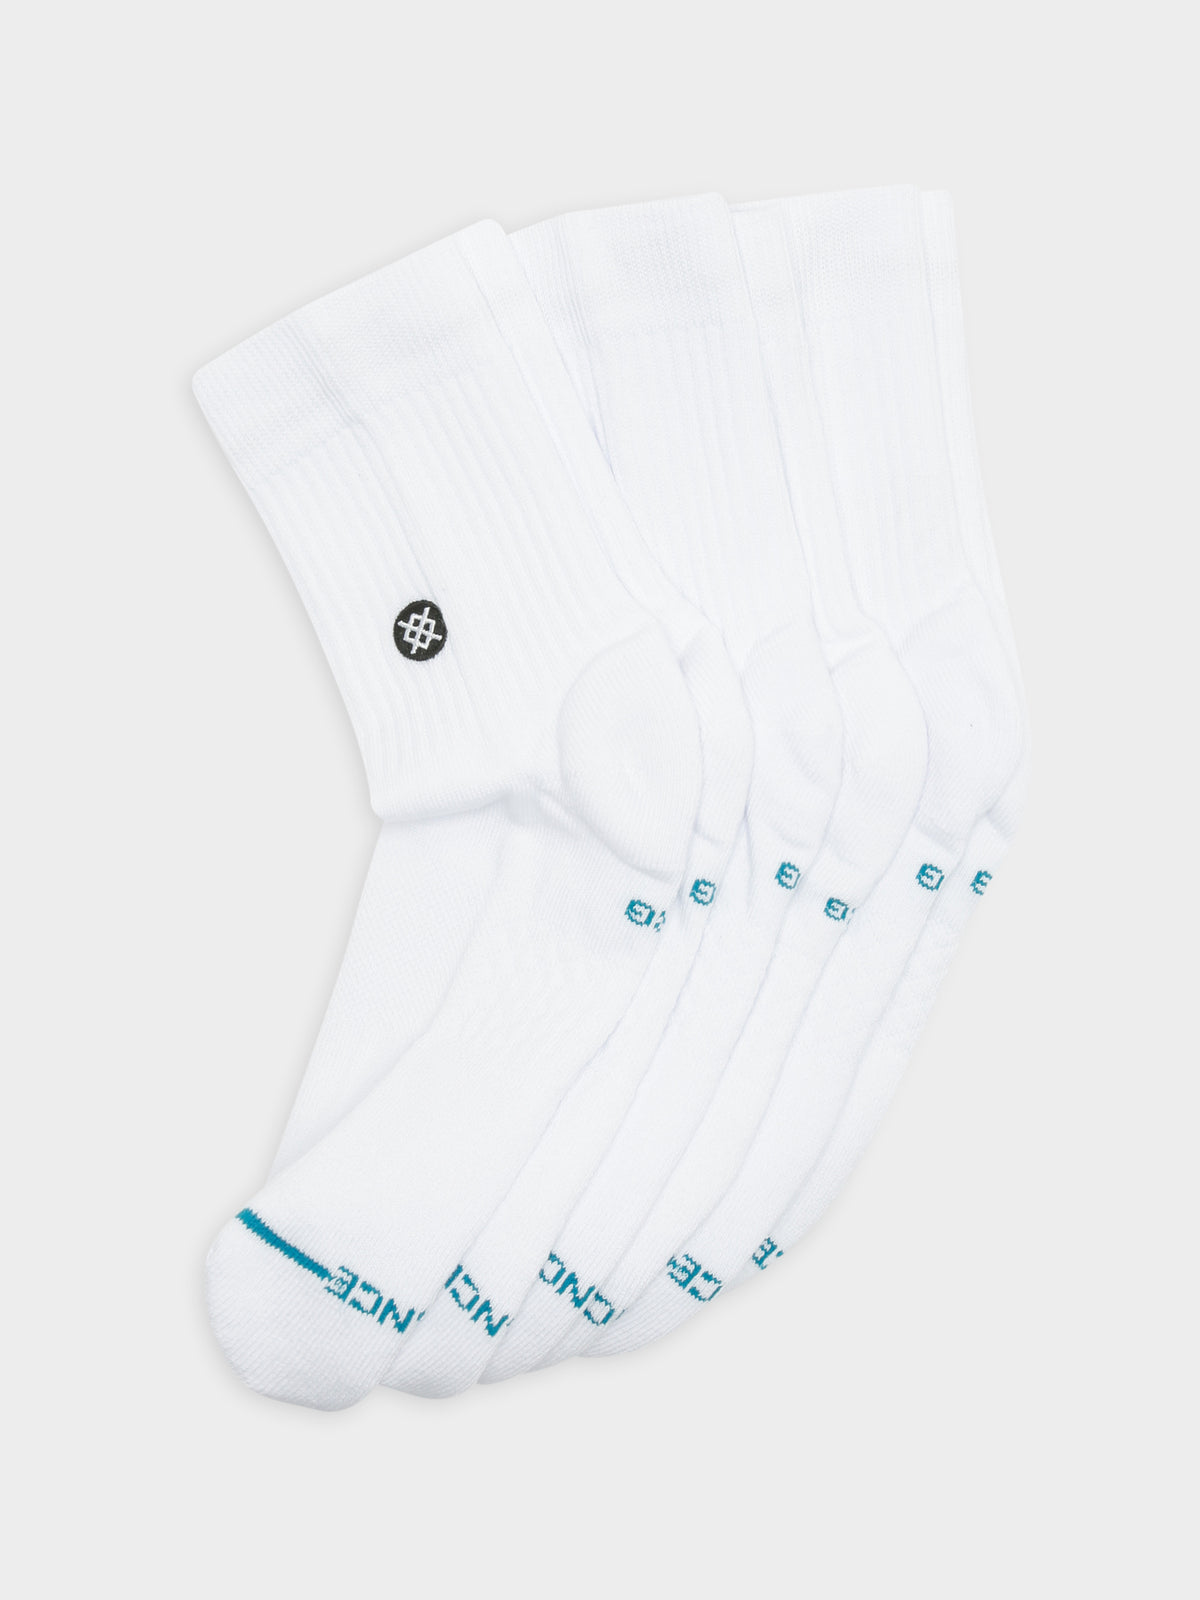 3 Pairs of Icon Quarter Socks in White